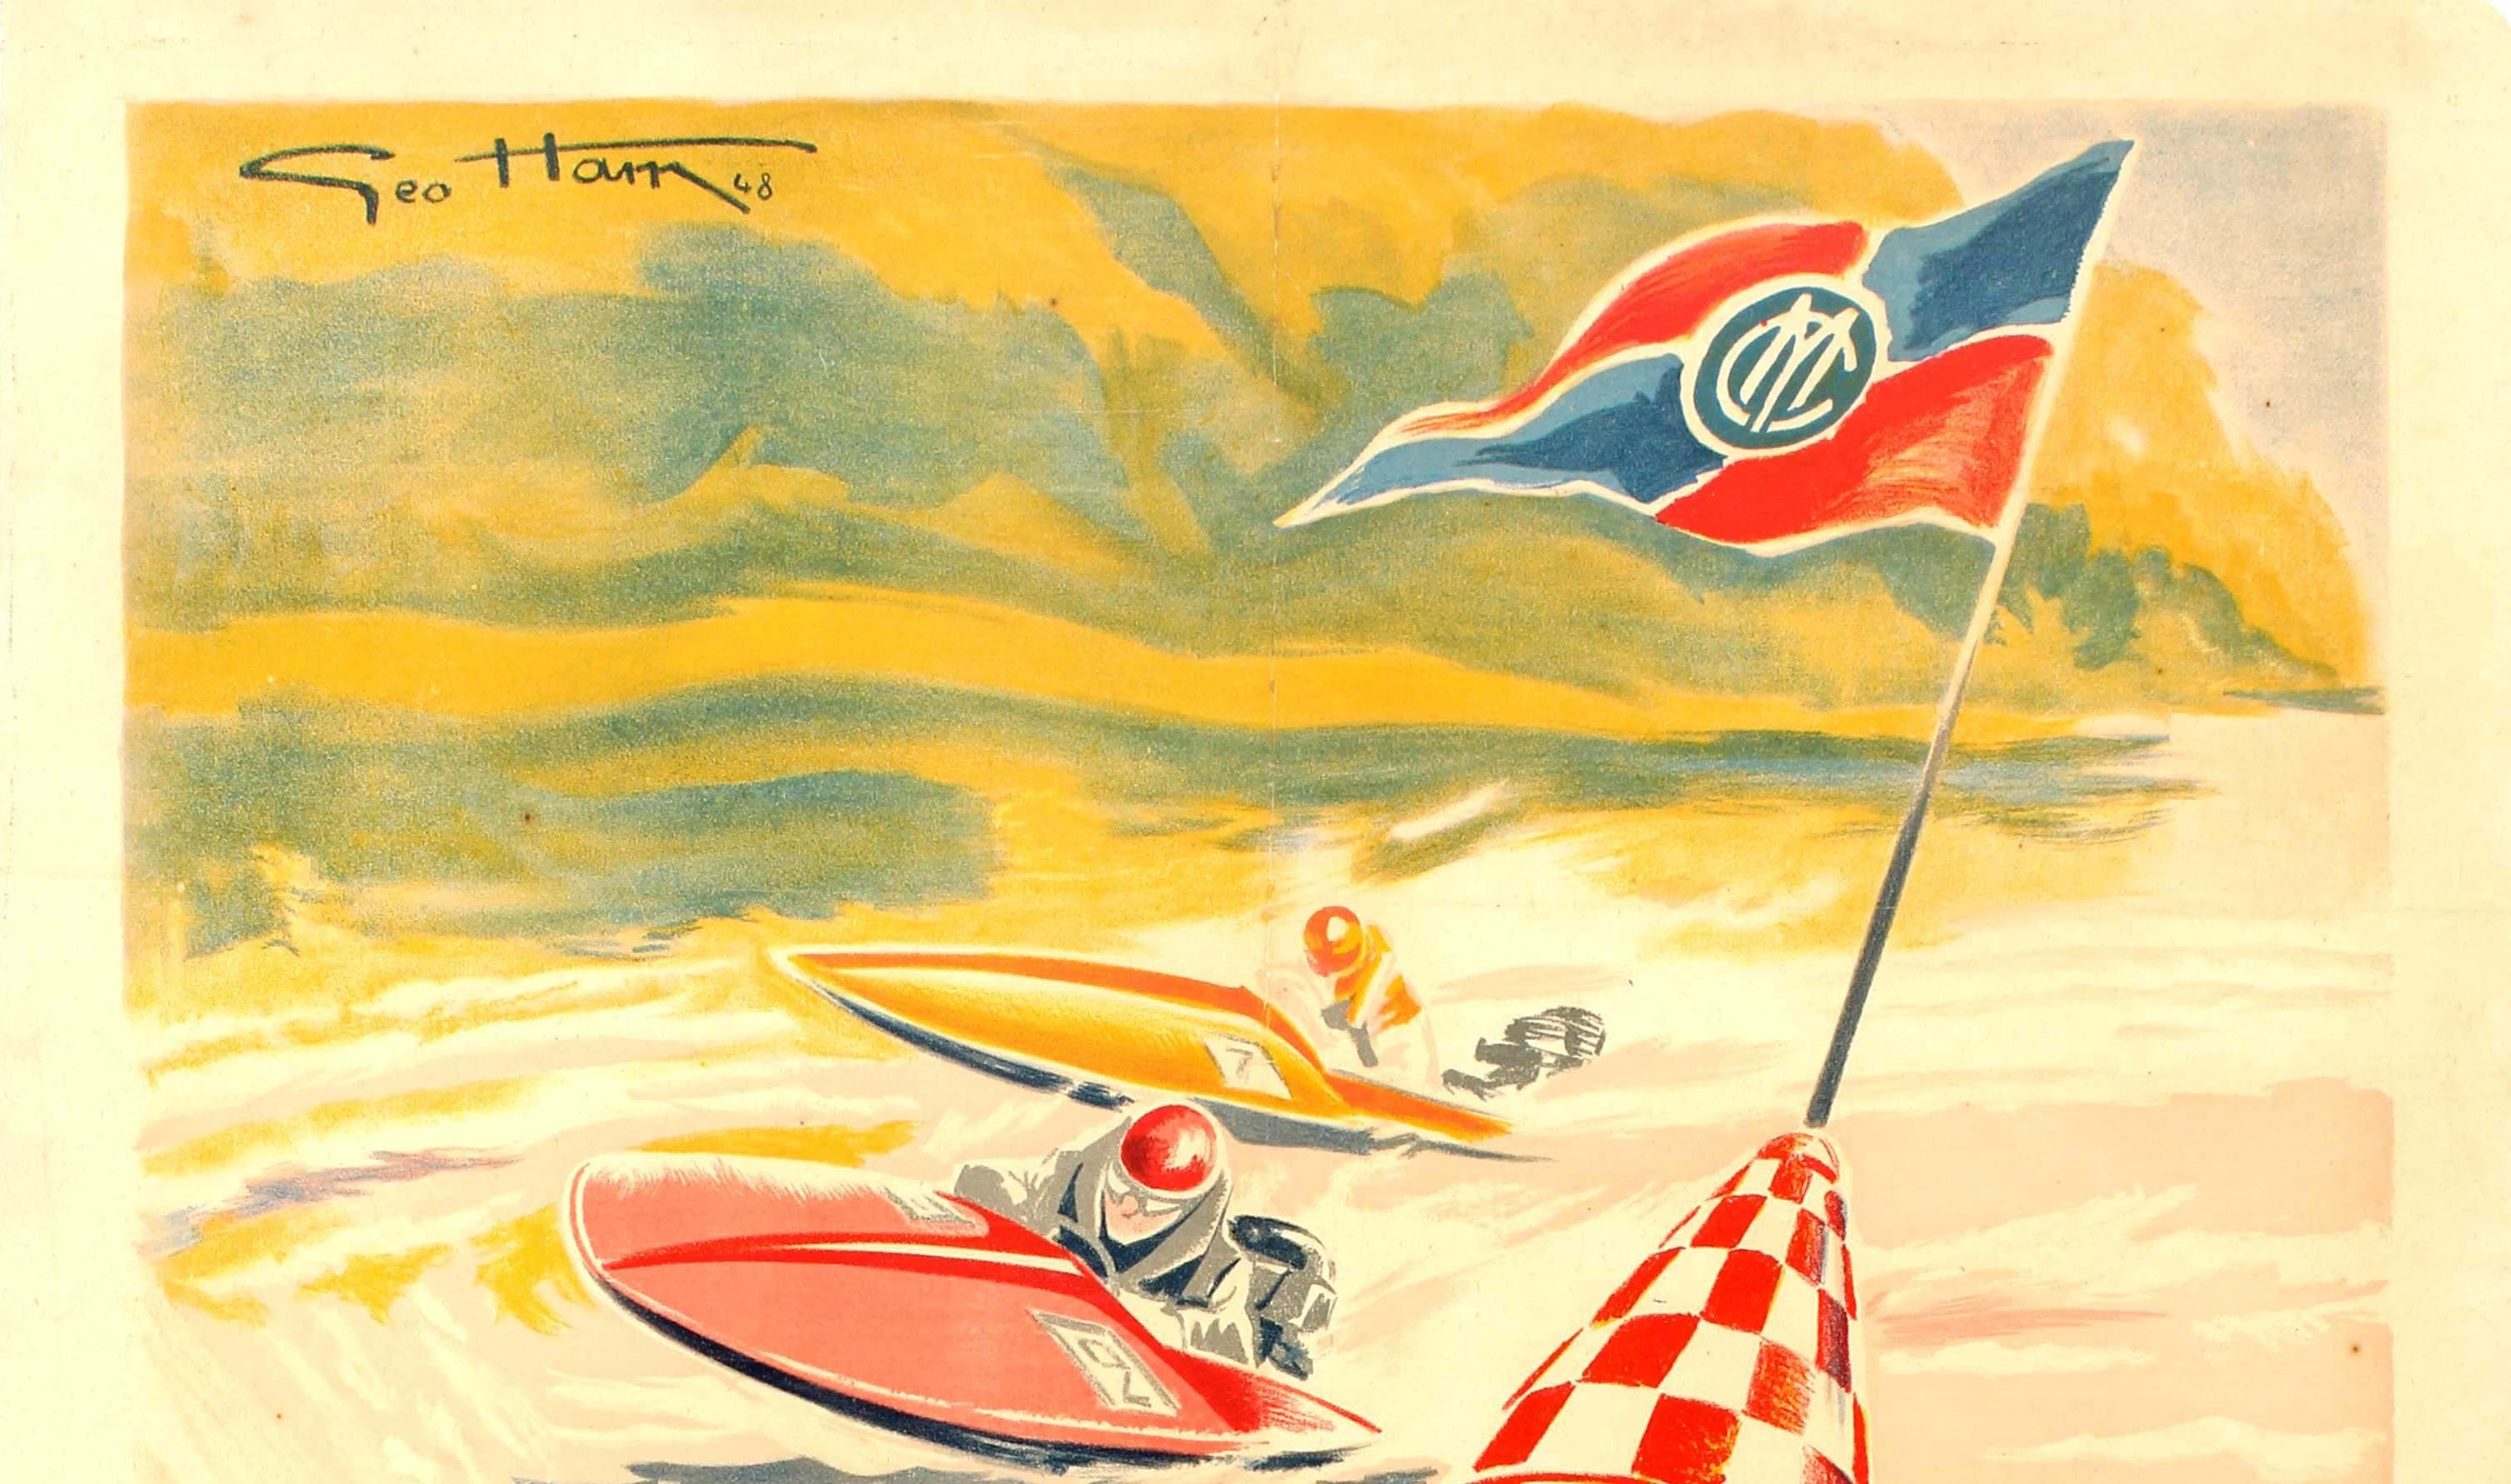 Original Vintage Water Sport Poster For Grand Meeting International Motonautique - Print by Geo Ham